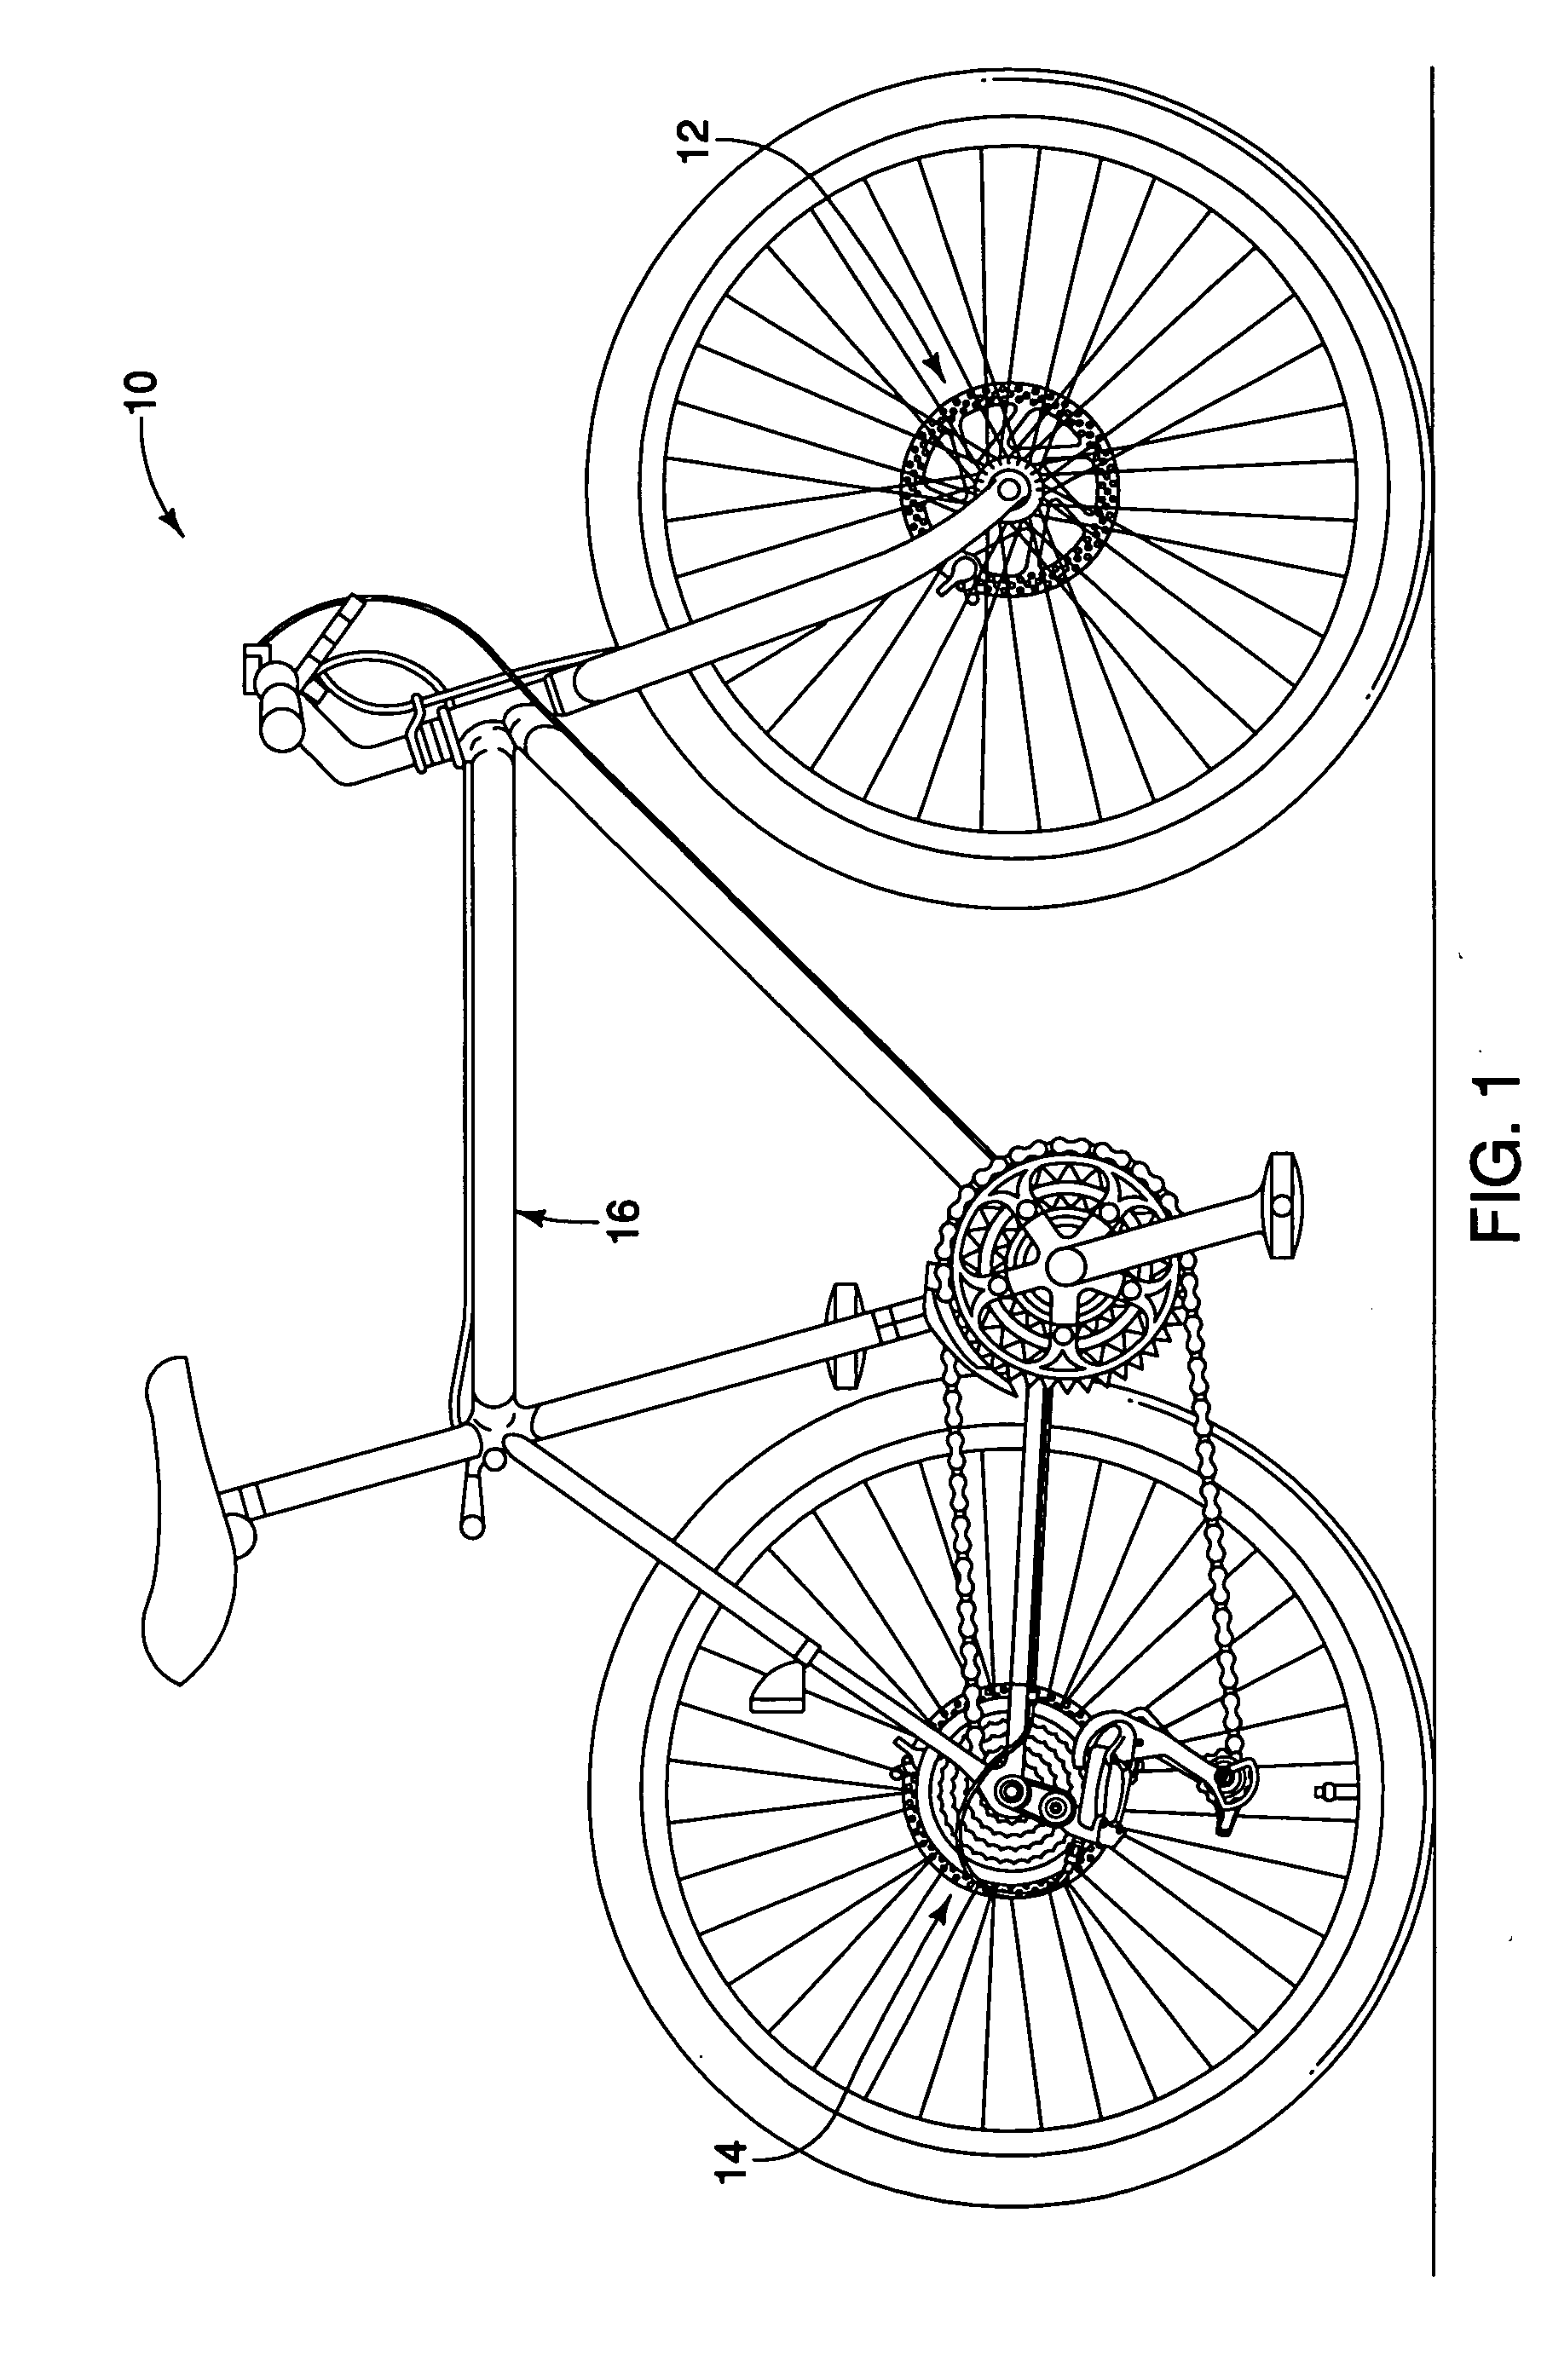 Bicycle hub